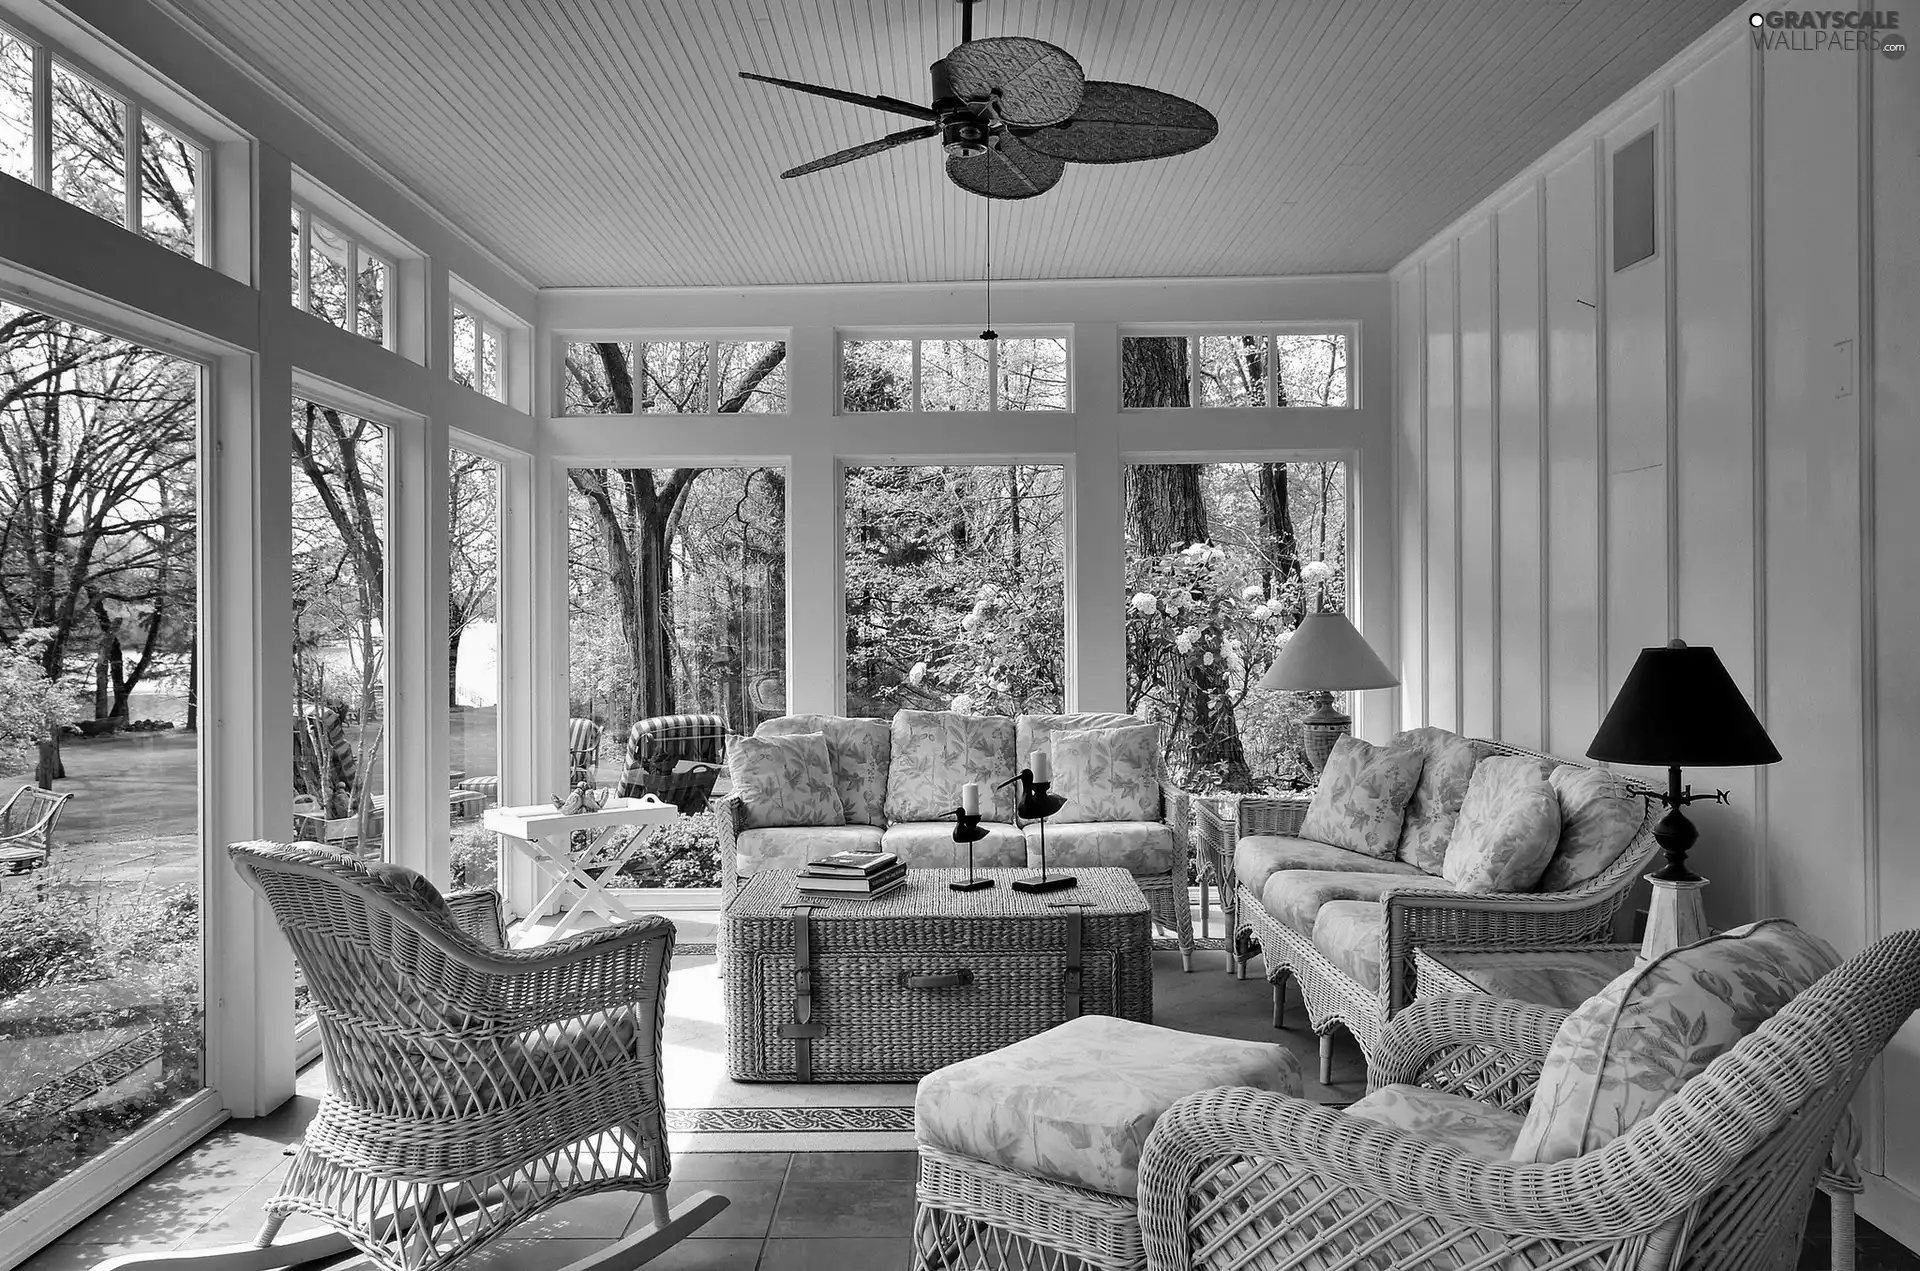 veranda, furniture, Garden, wicker